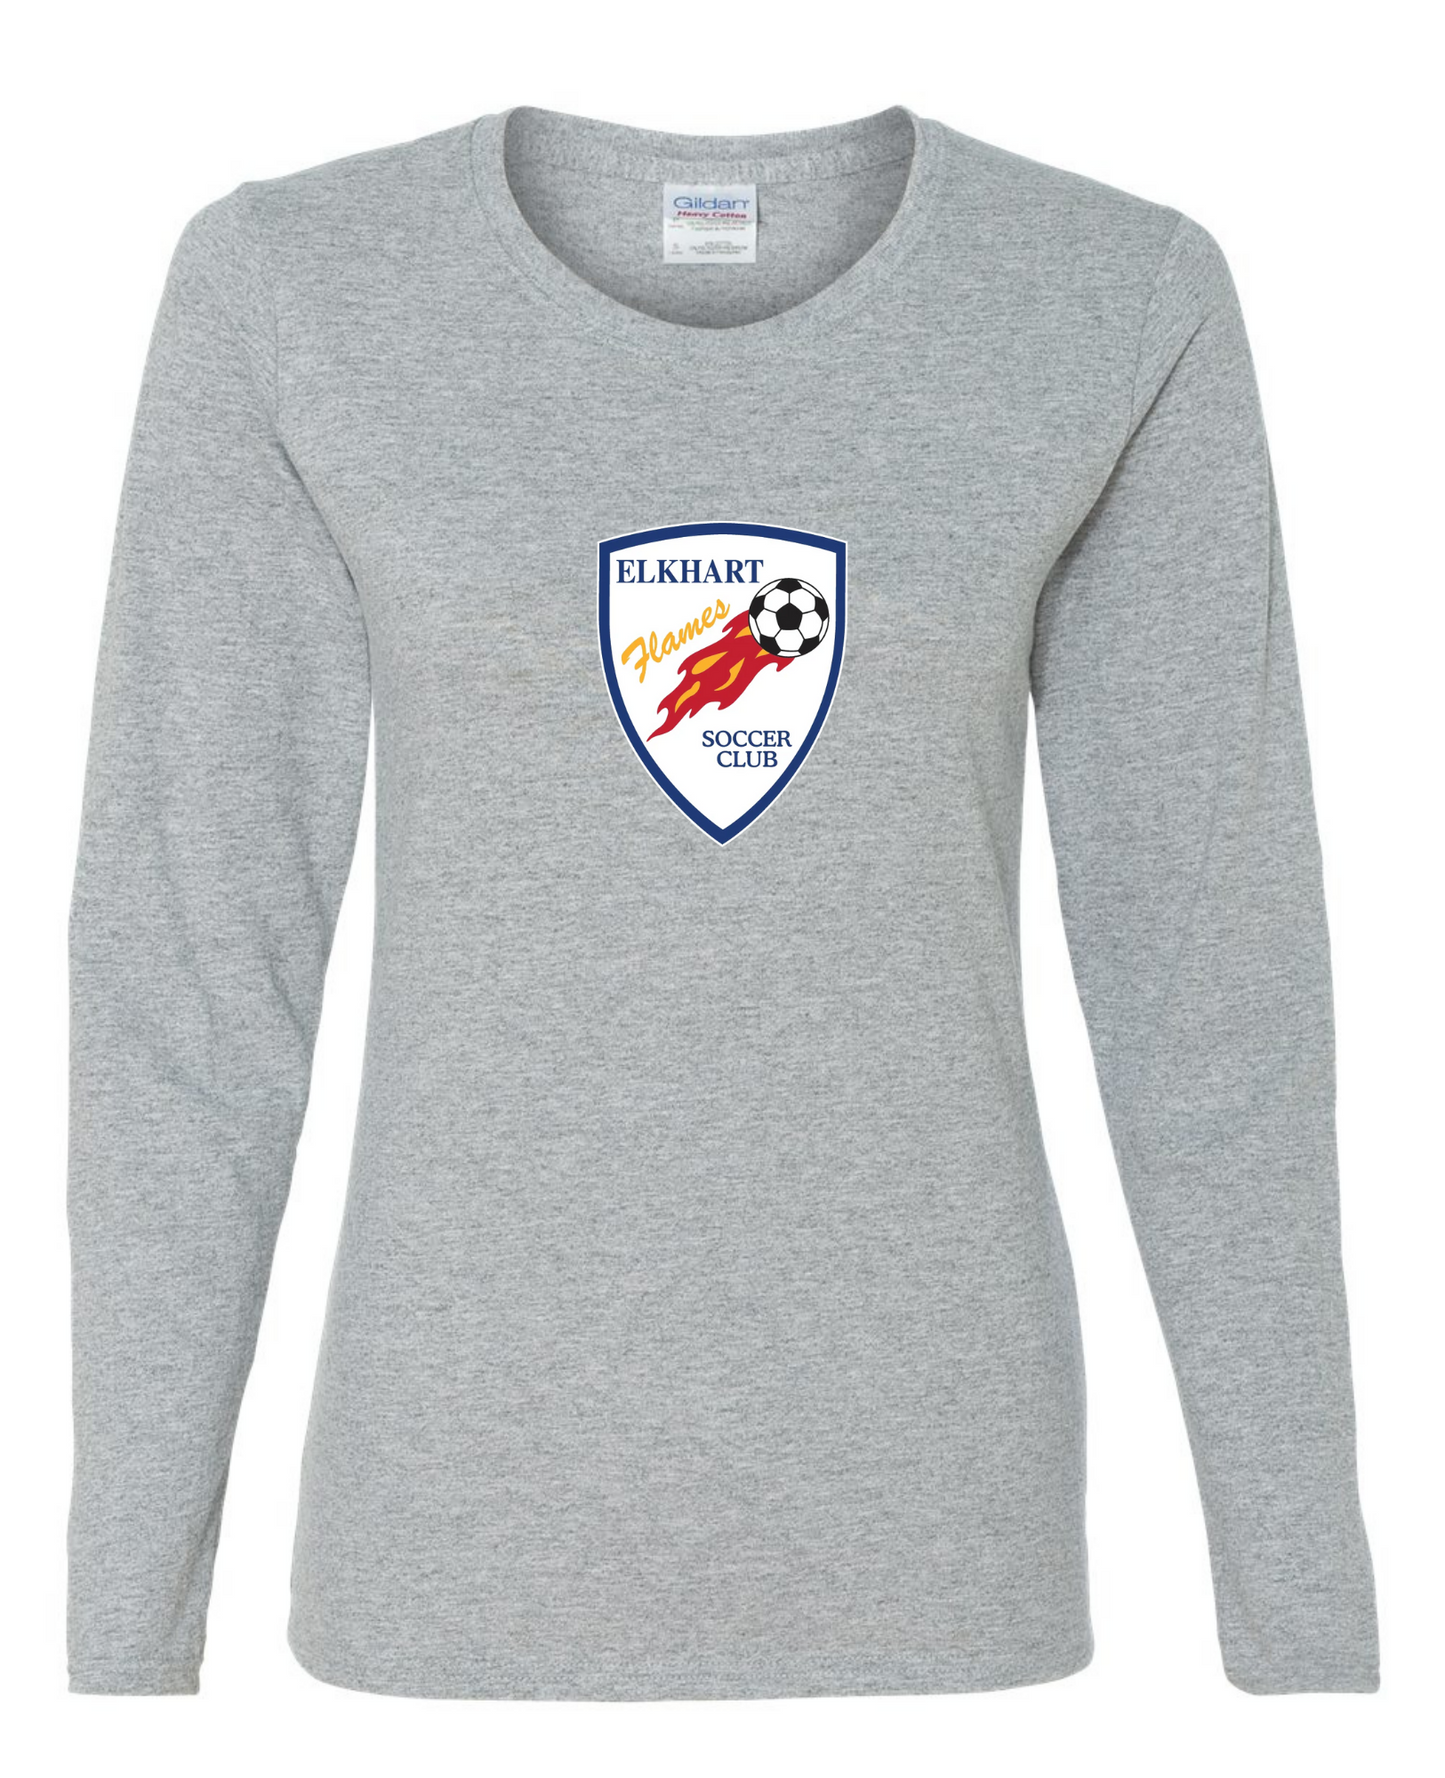 Elkhart Flames Soccer Club Logo Long Sleeve Tee - Women's